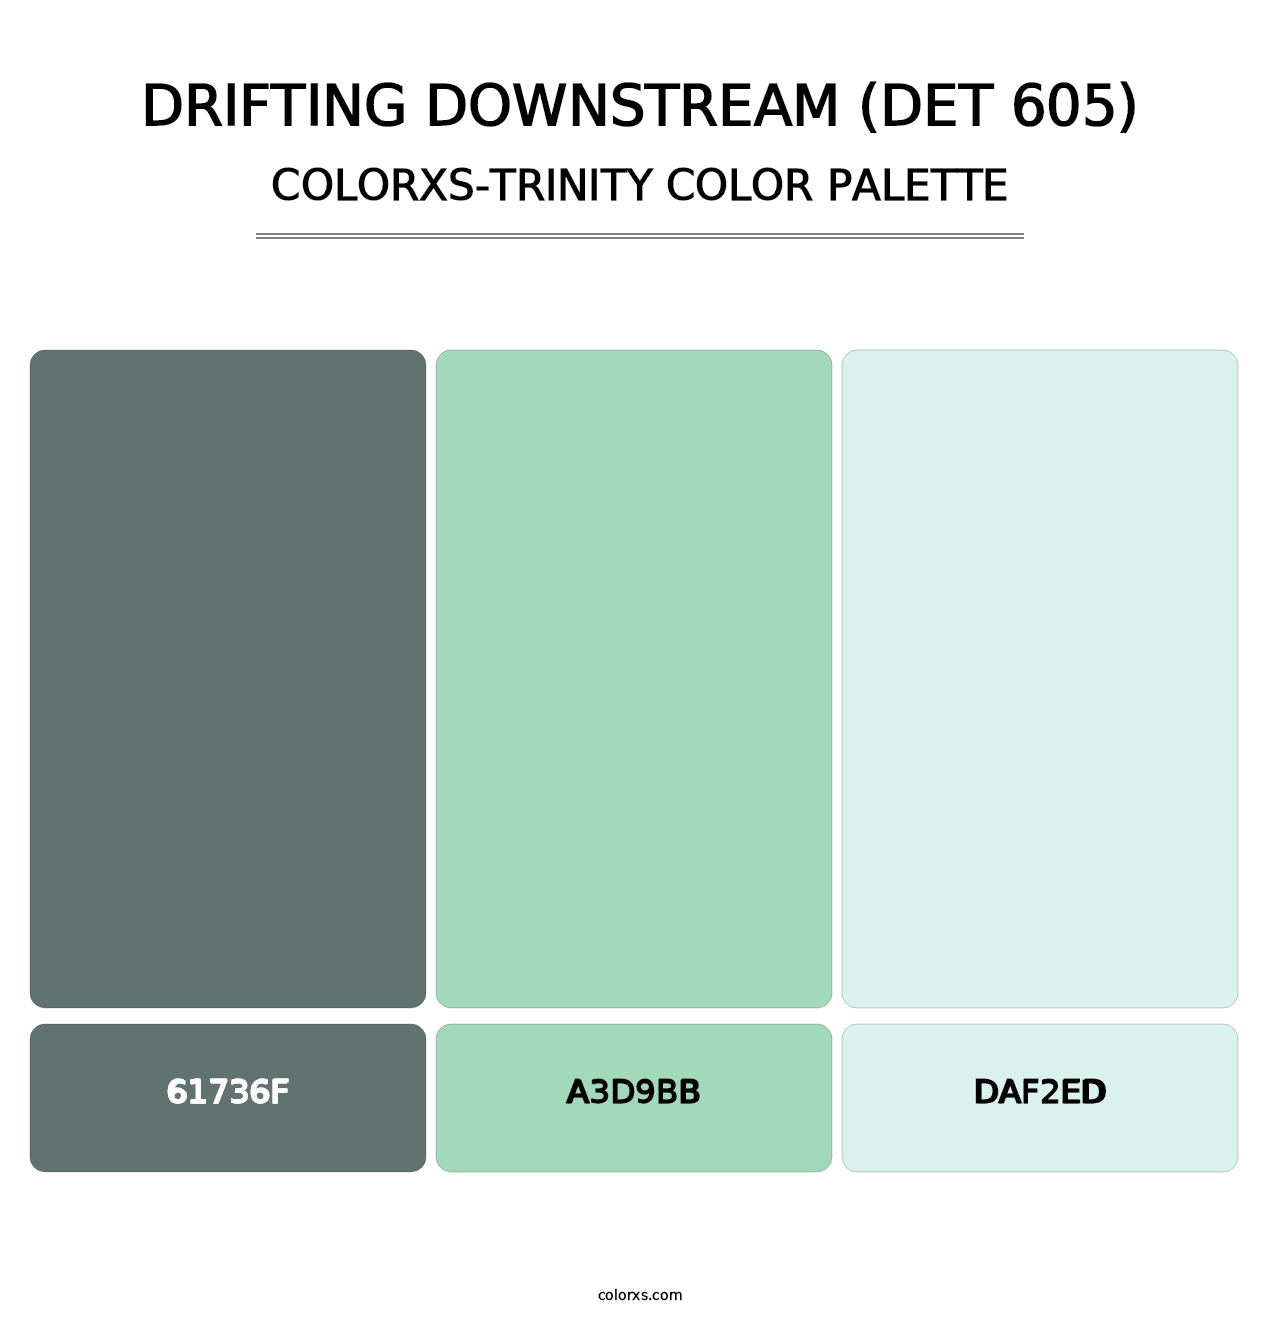 Drifting Downstream (DET 605) - Colorxs Trinity Palette